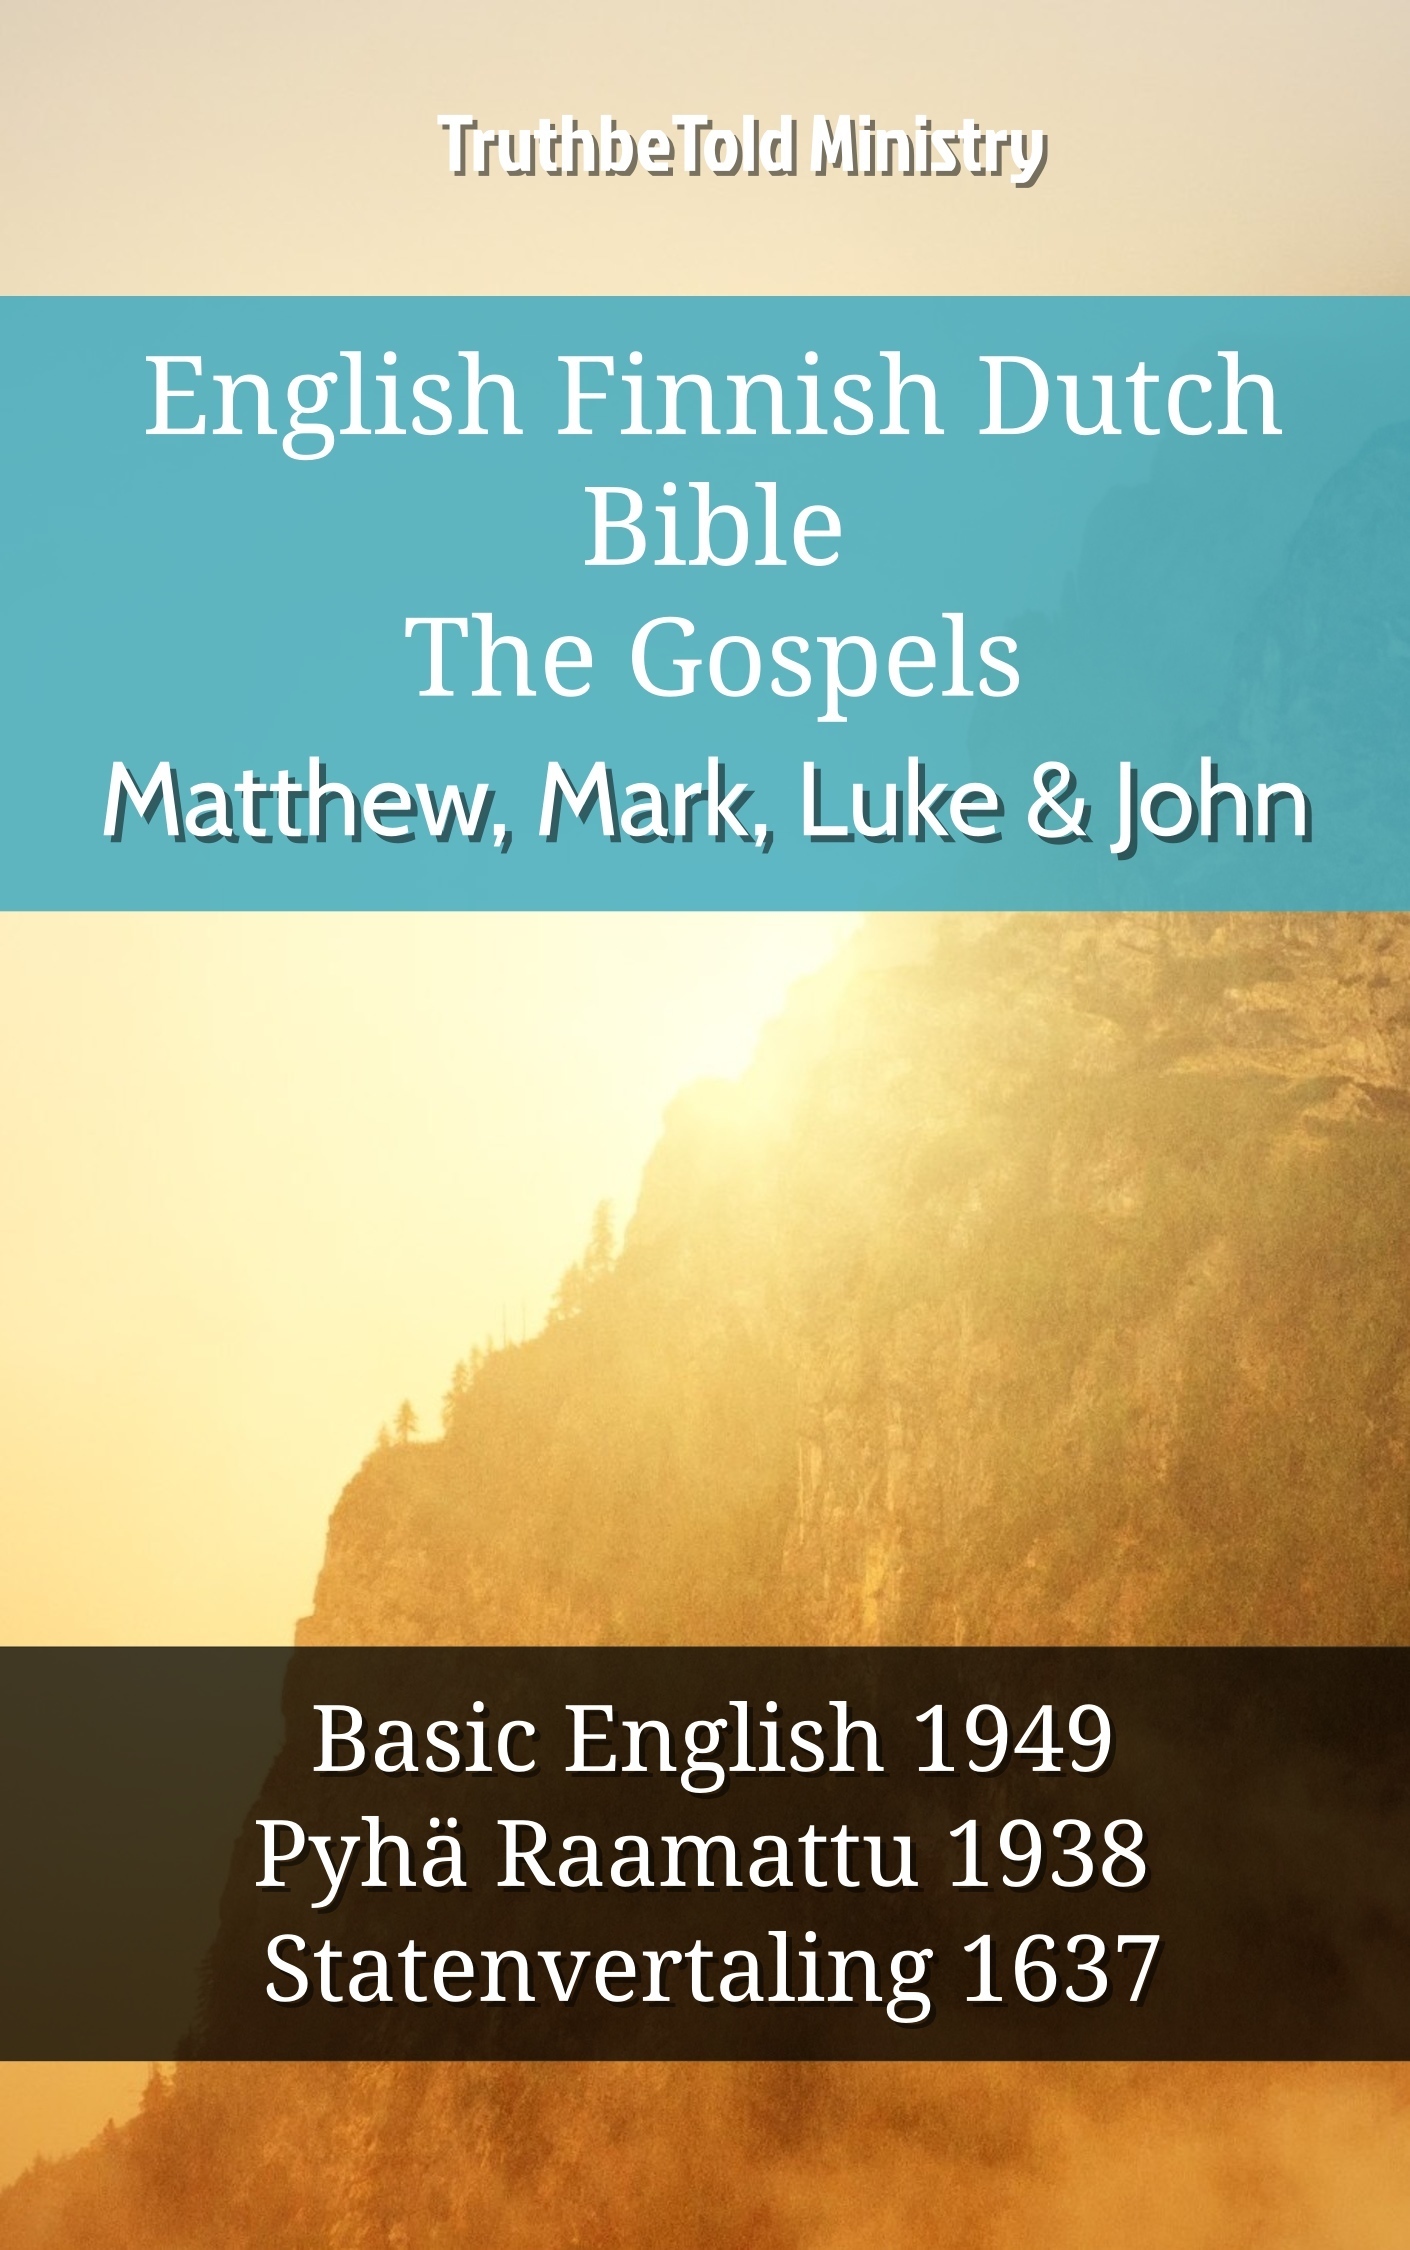 English Finnish Dutch Bible - The Gospels - Matthew, Mark, Luke & John